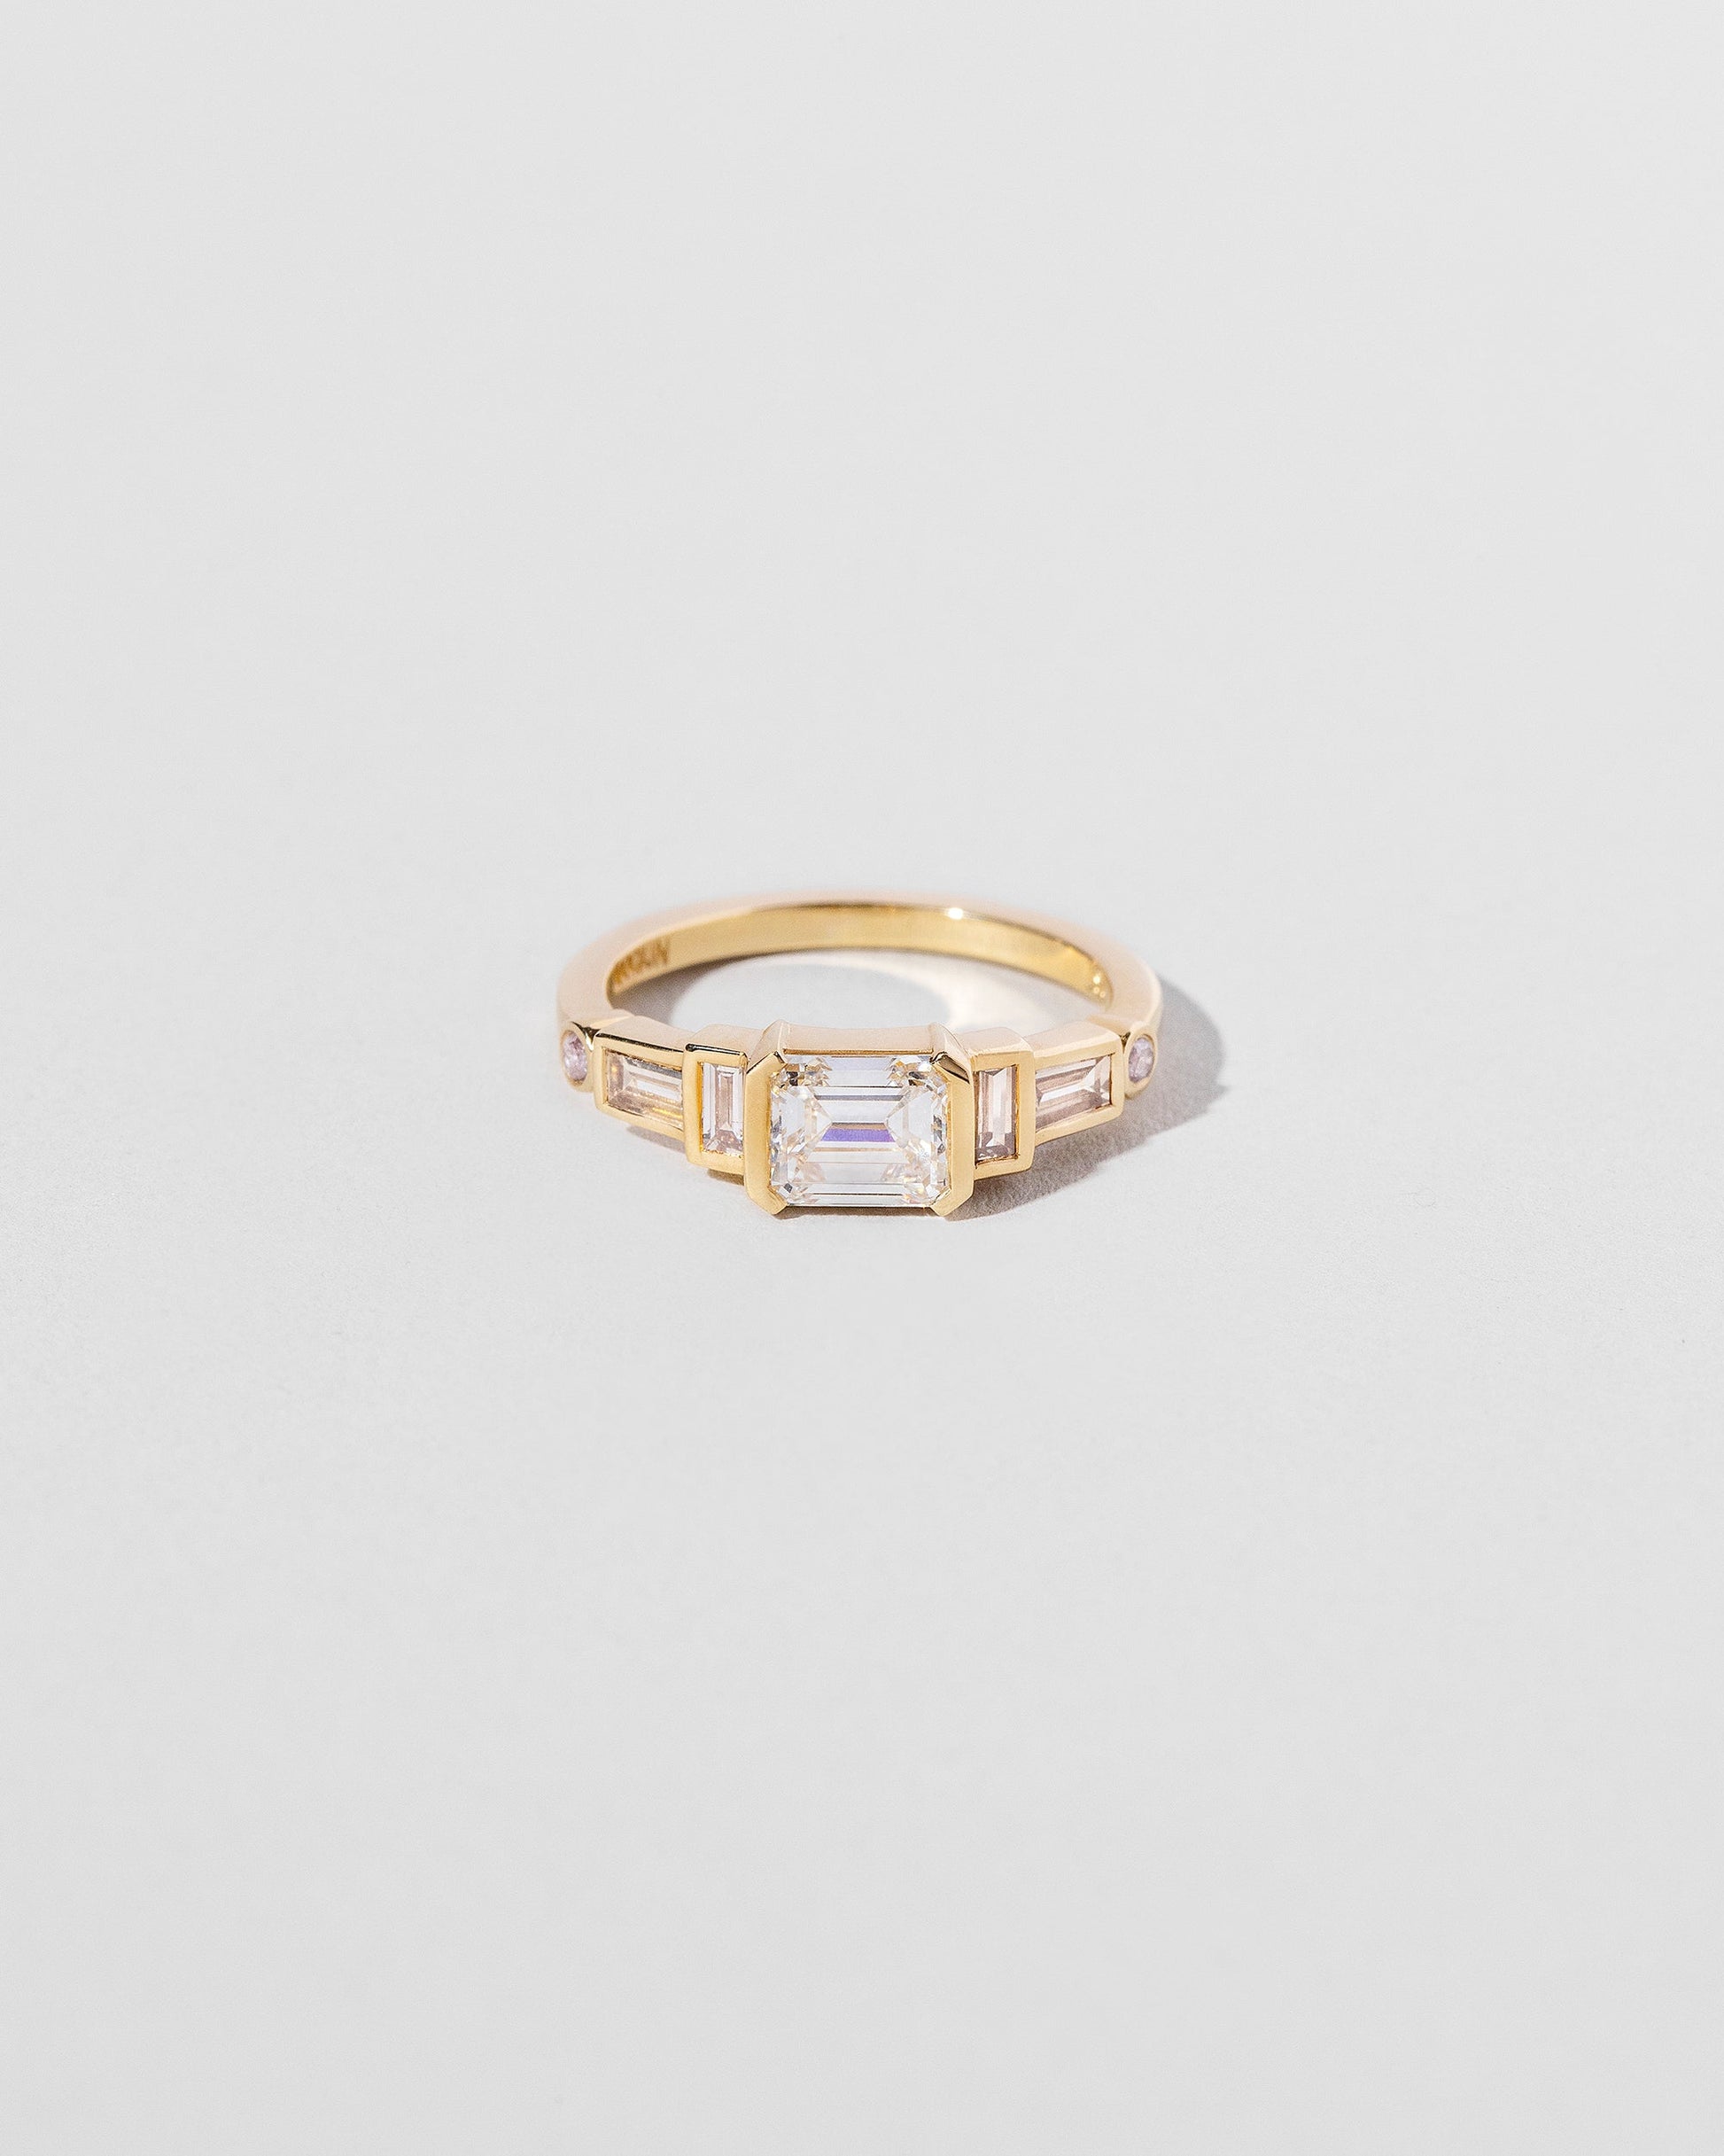  Elpis Ring on light color background.